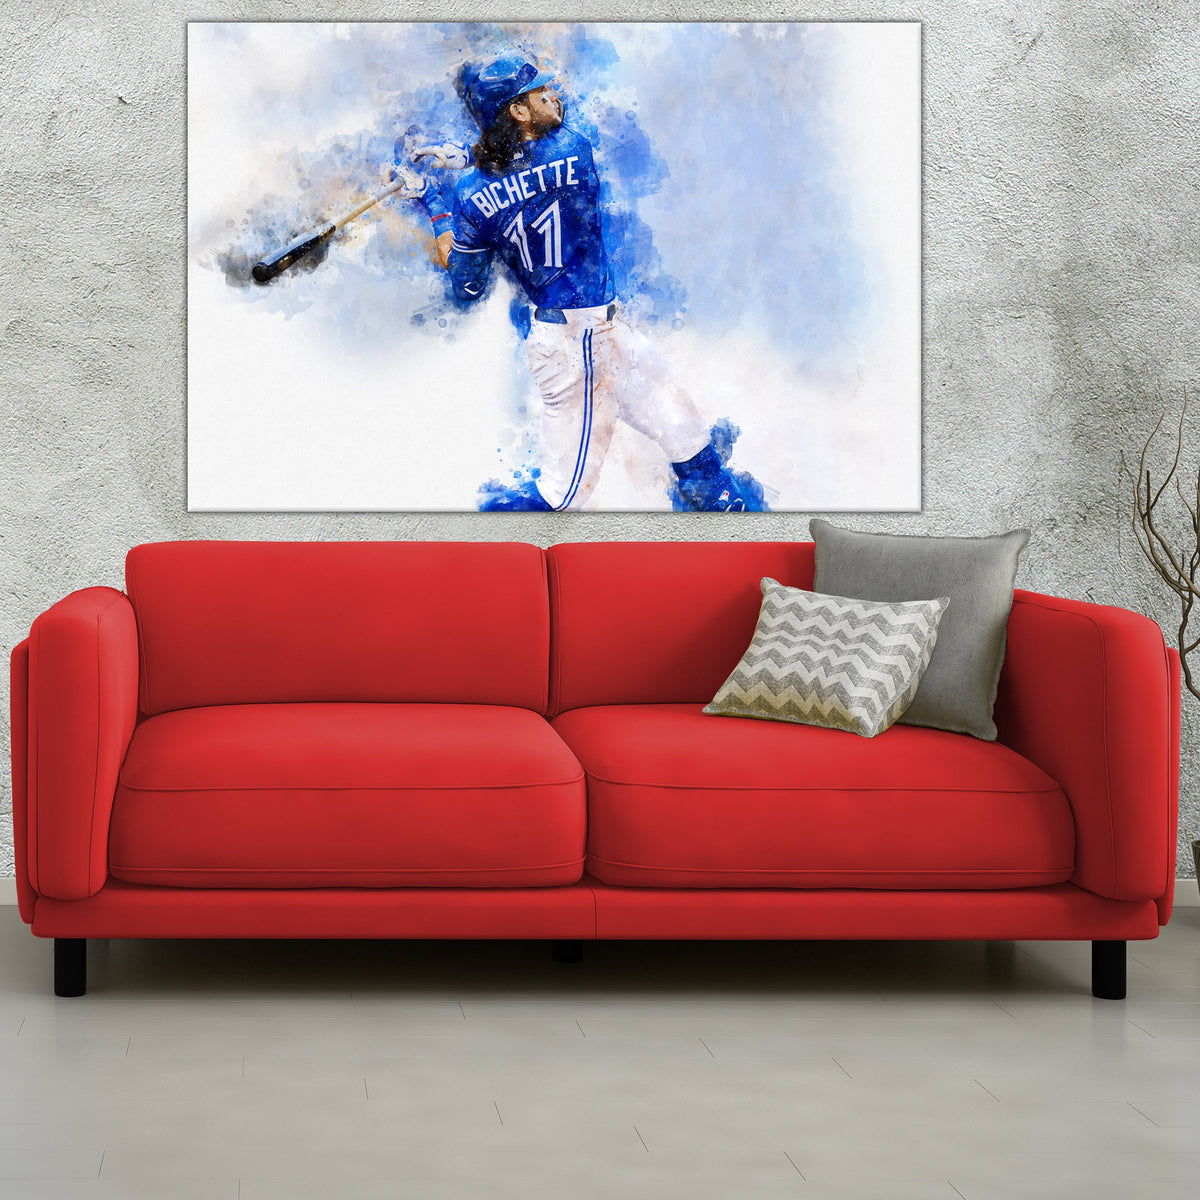 Bo Bichette Toronto Blue Jays Poster Print, Real Player, Baseball Player,  Canvas Art, Bo Bichette Decor, Posters for Wall, ArtWork SIZE 24''x32''  (61x81 cm) : : Sports & Outdoors